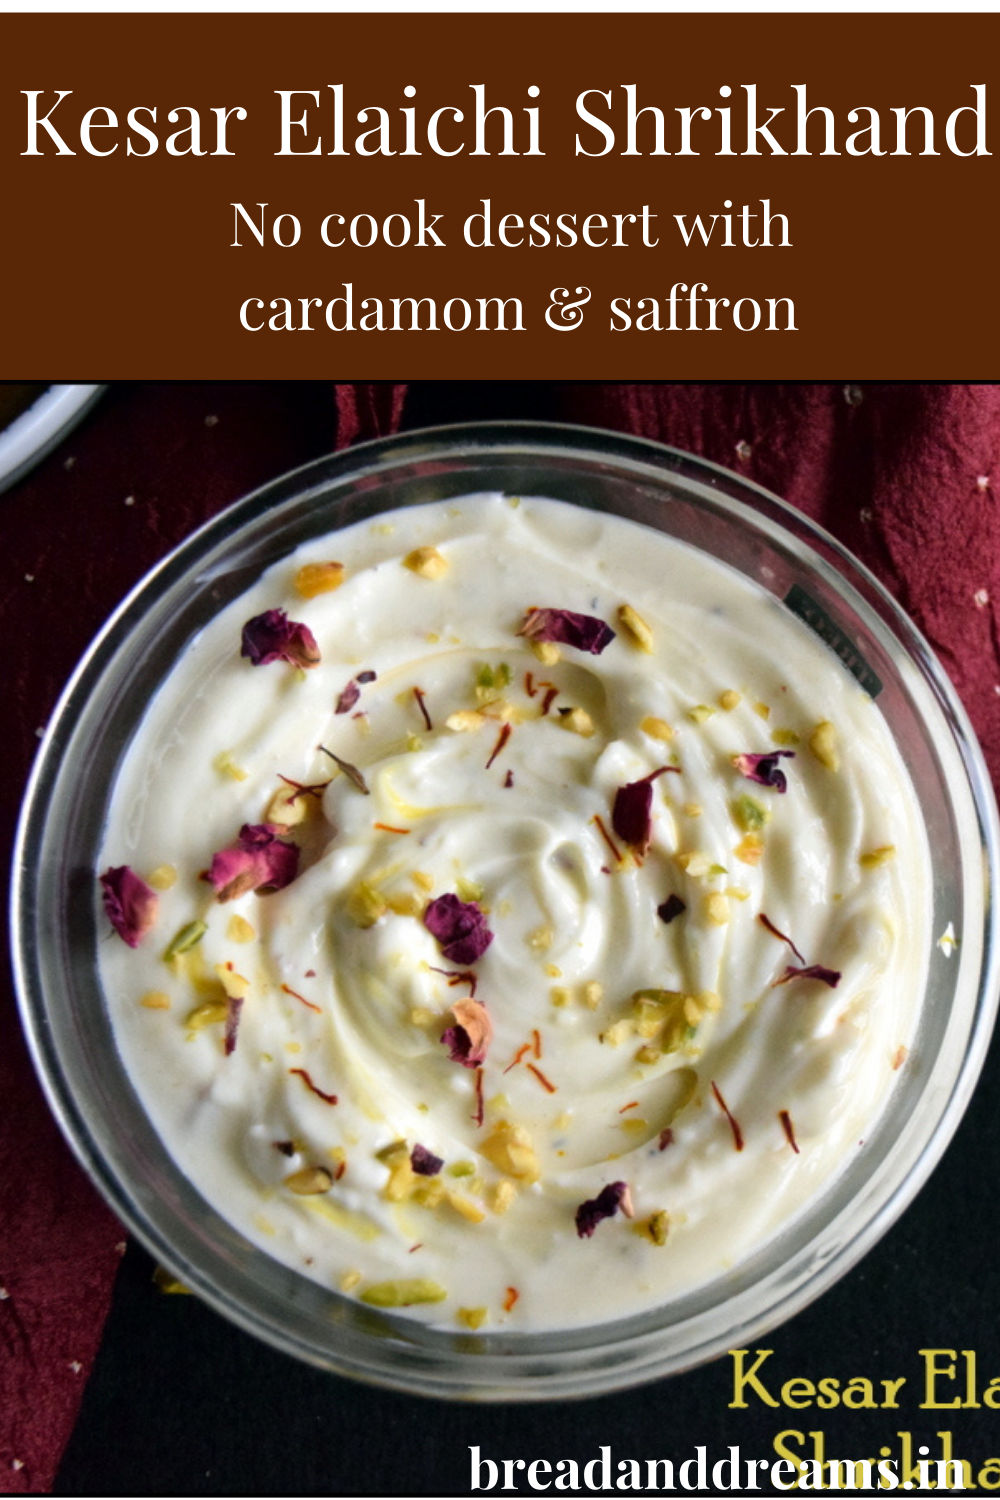 Saffron & cardamom flavoured shrikhand